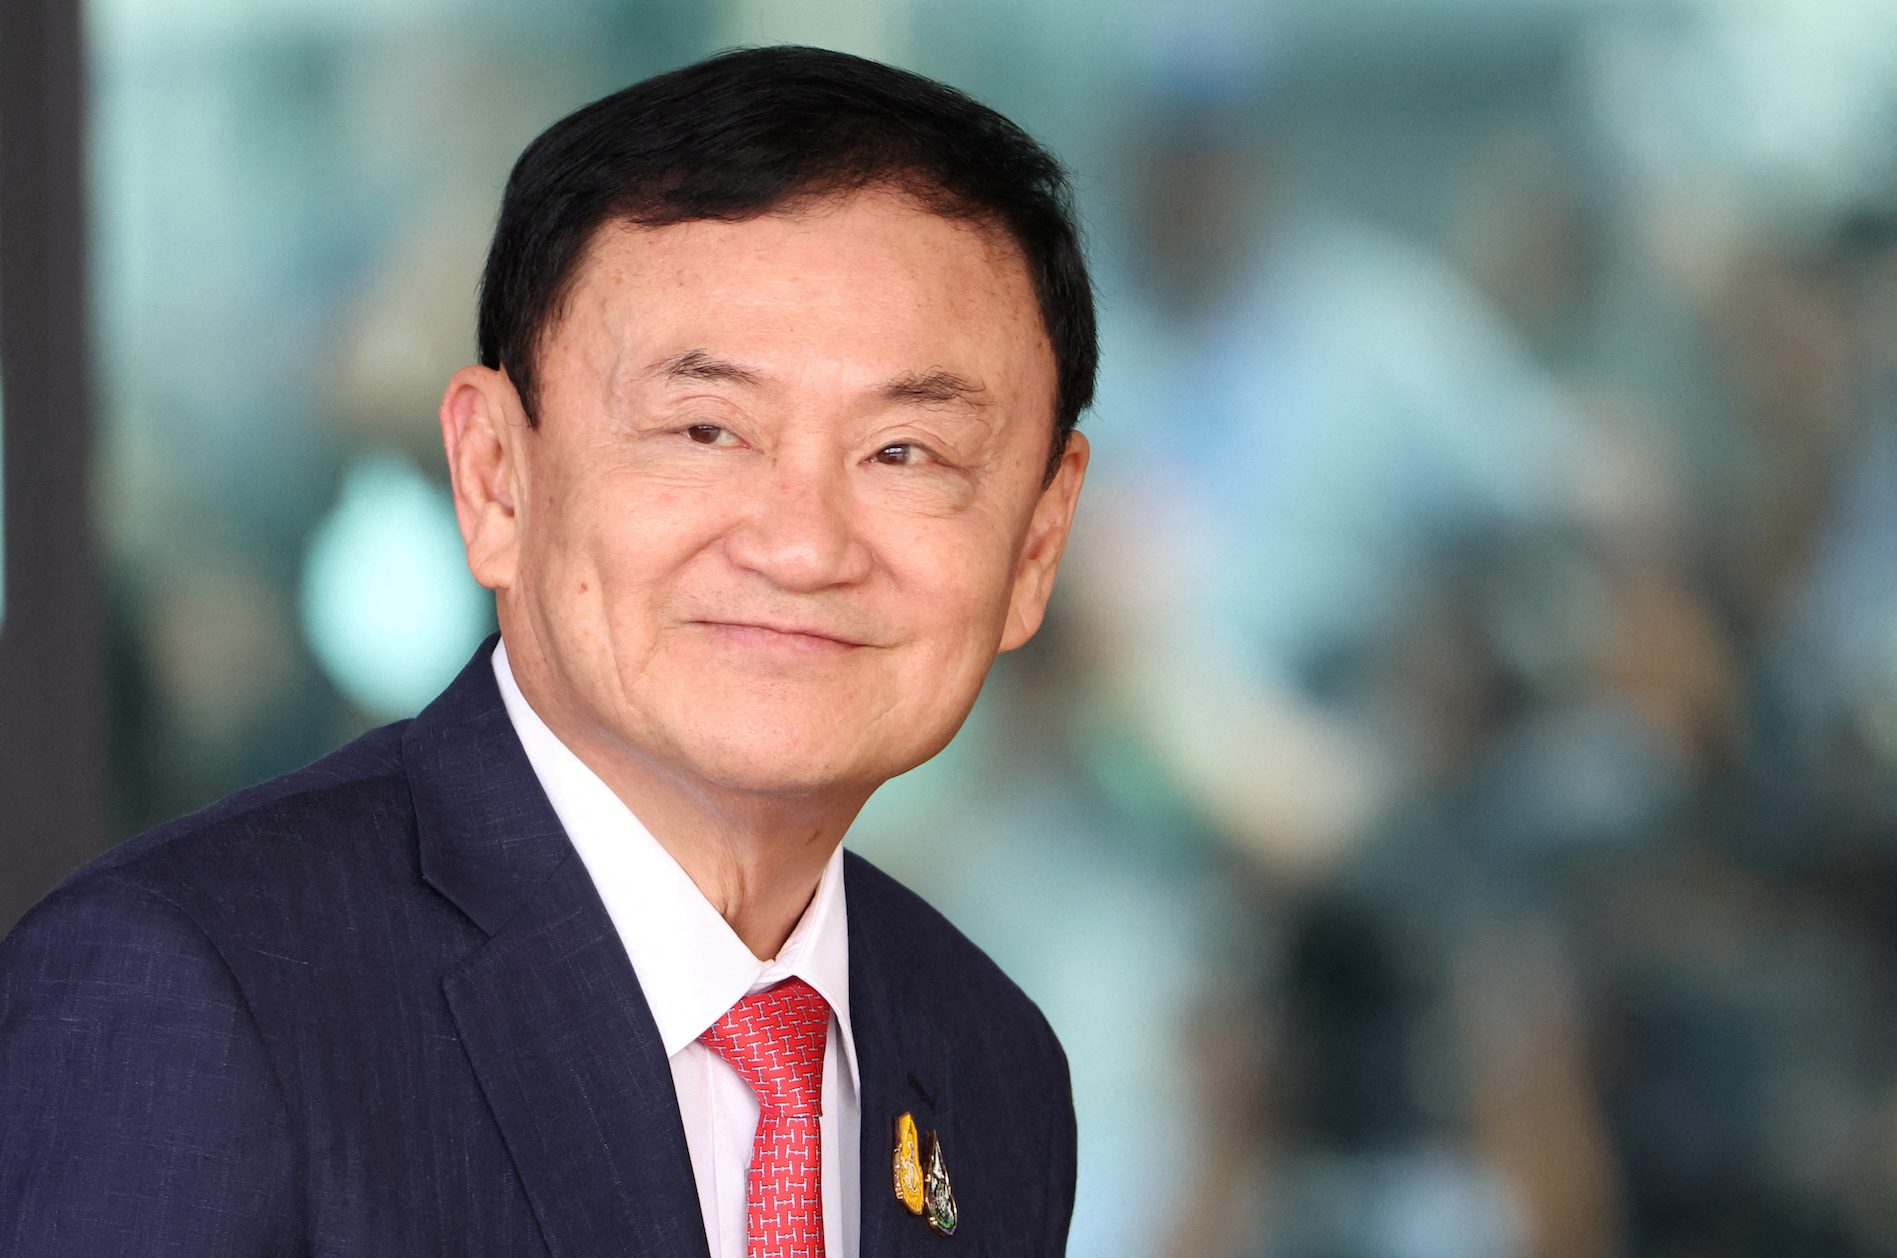 Thai king commutes former PM Thaksin’s prison sentence to 1 year